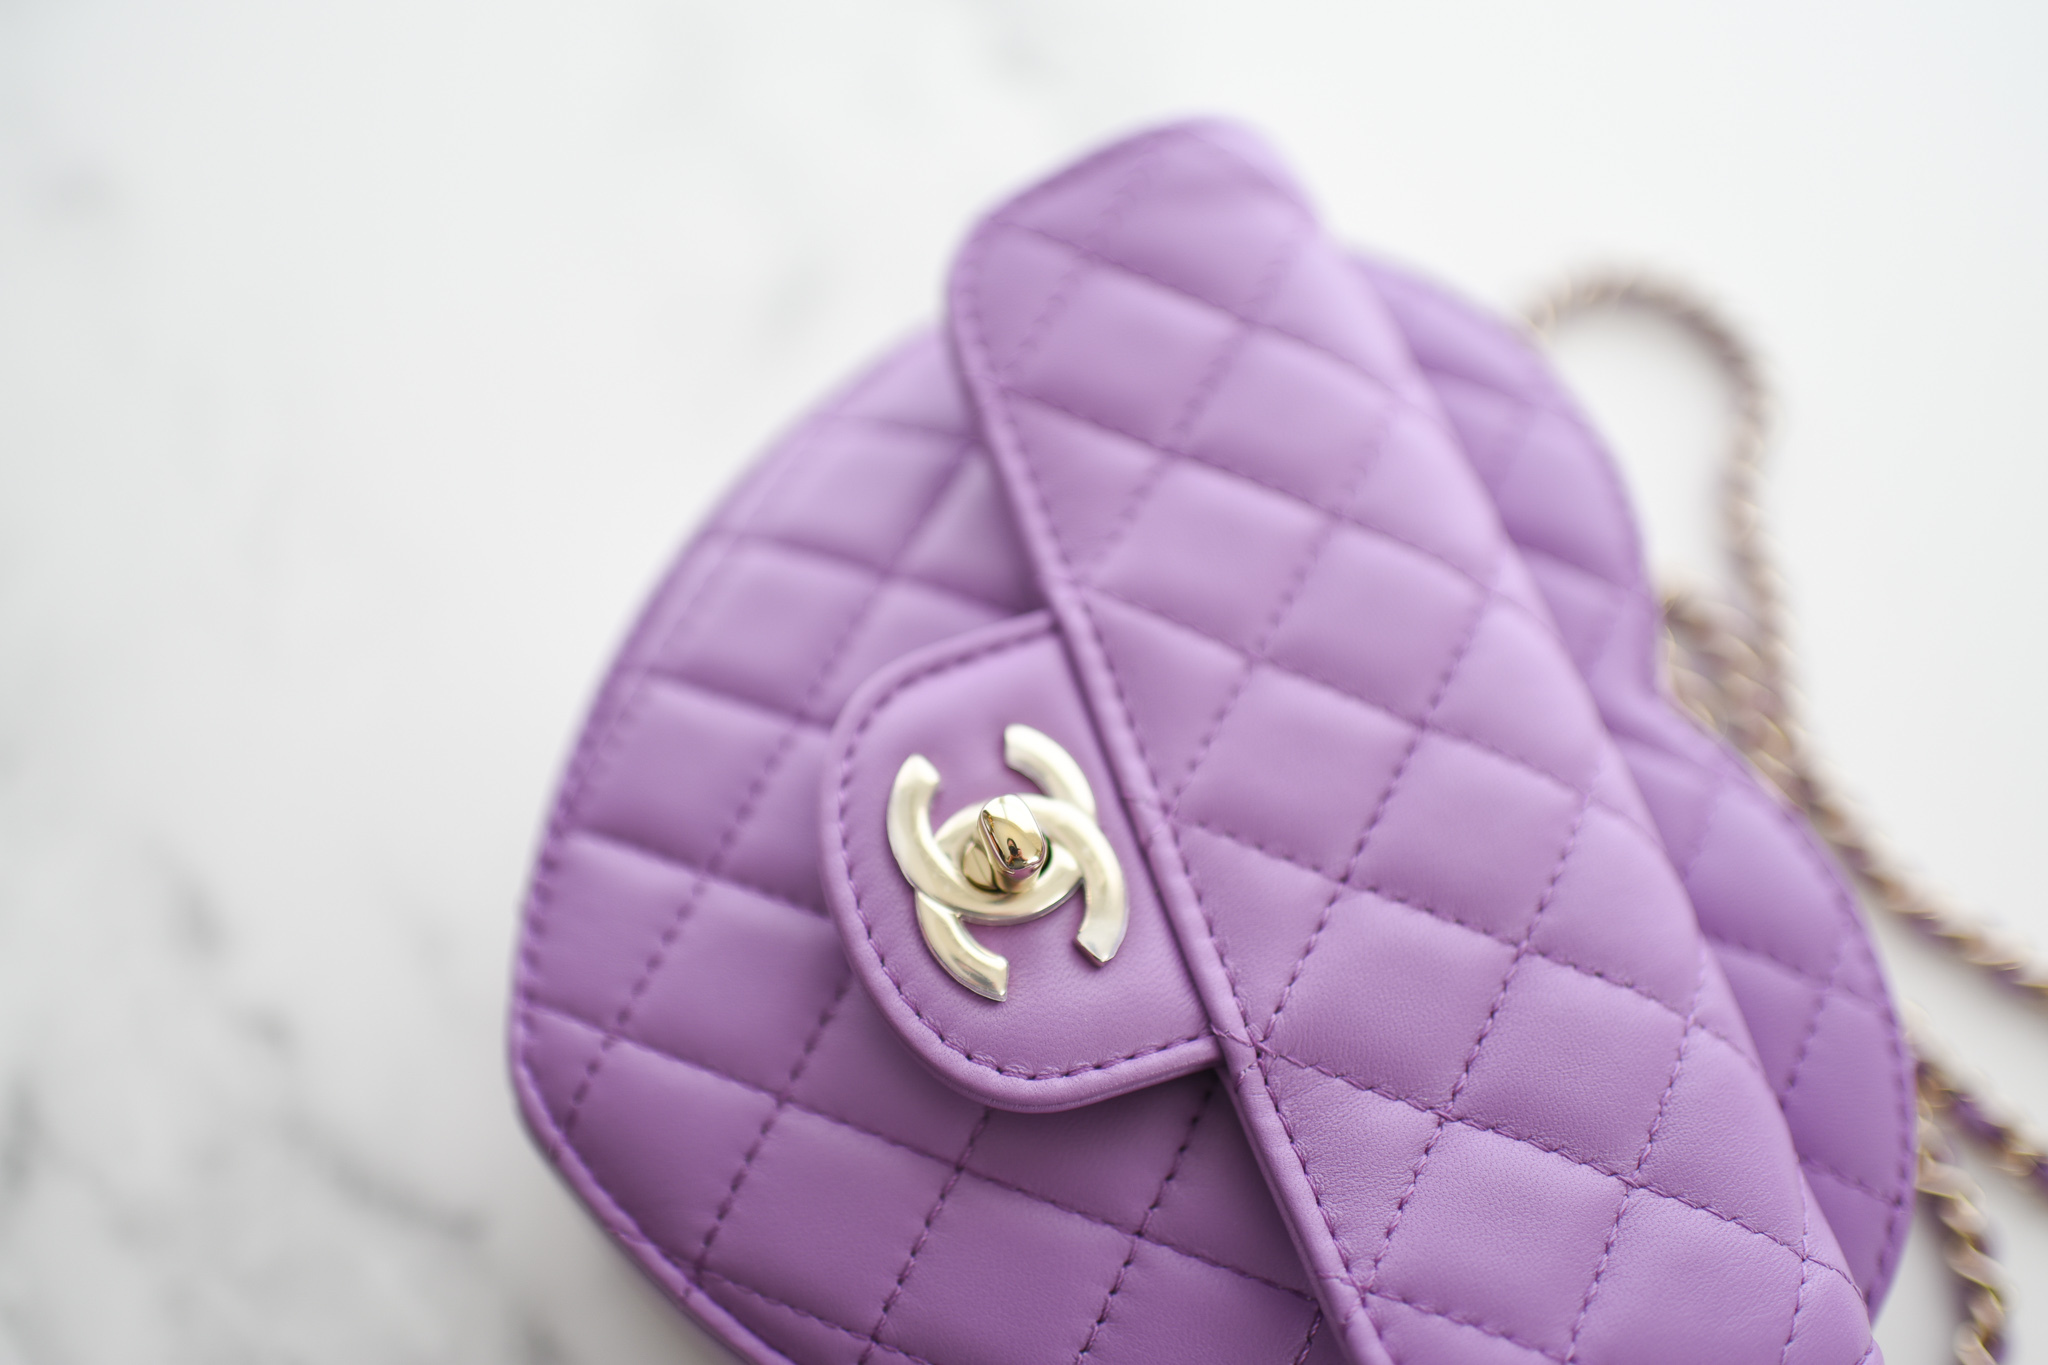 Chanel Heart Bag Large, Purple Lambskin Leather, Gold Hardware, New In Box  MA001 - Julia Rose Boston